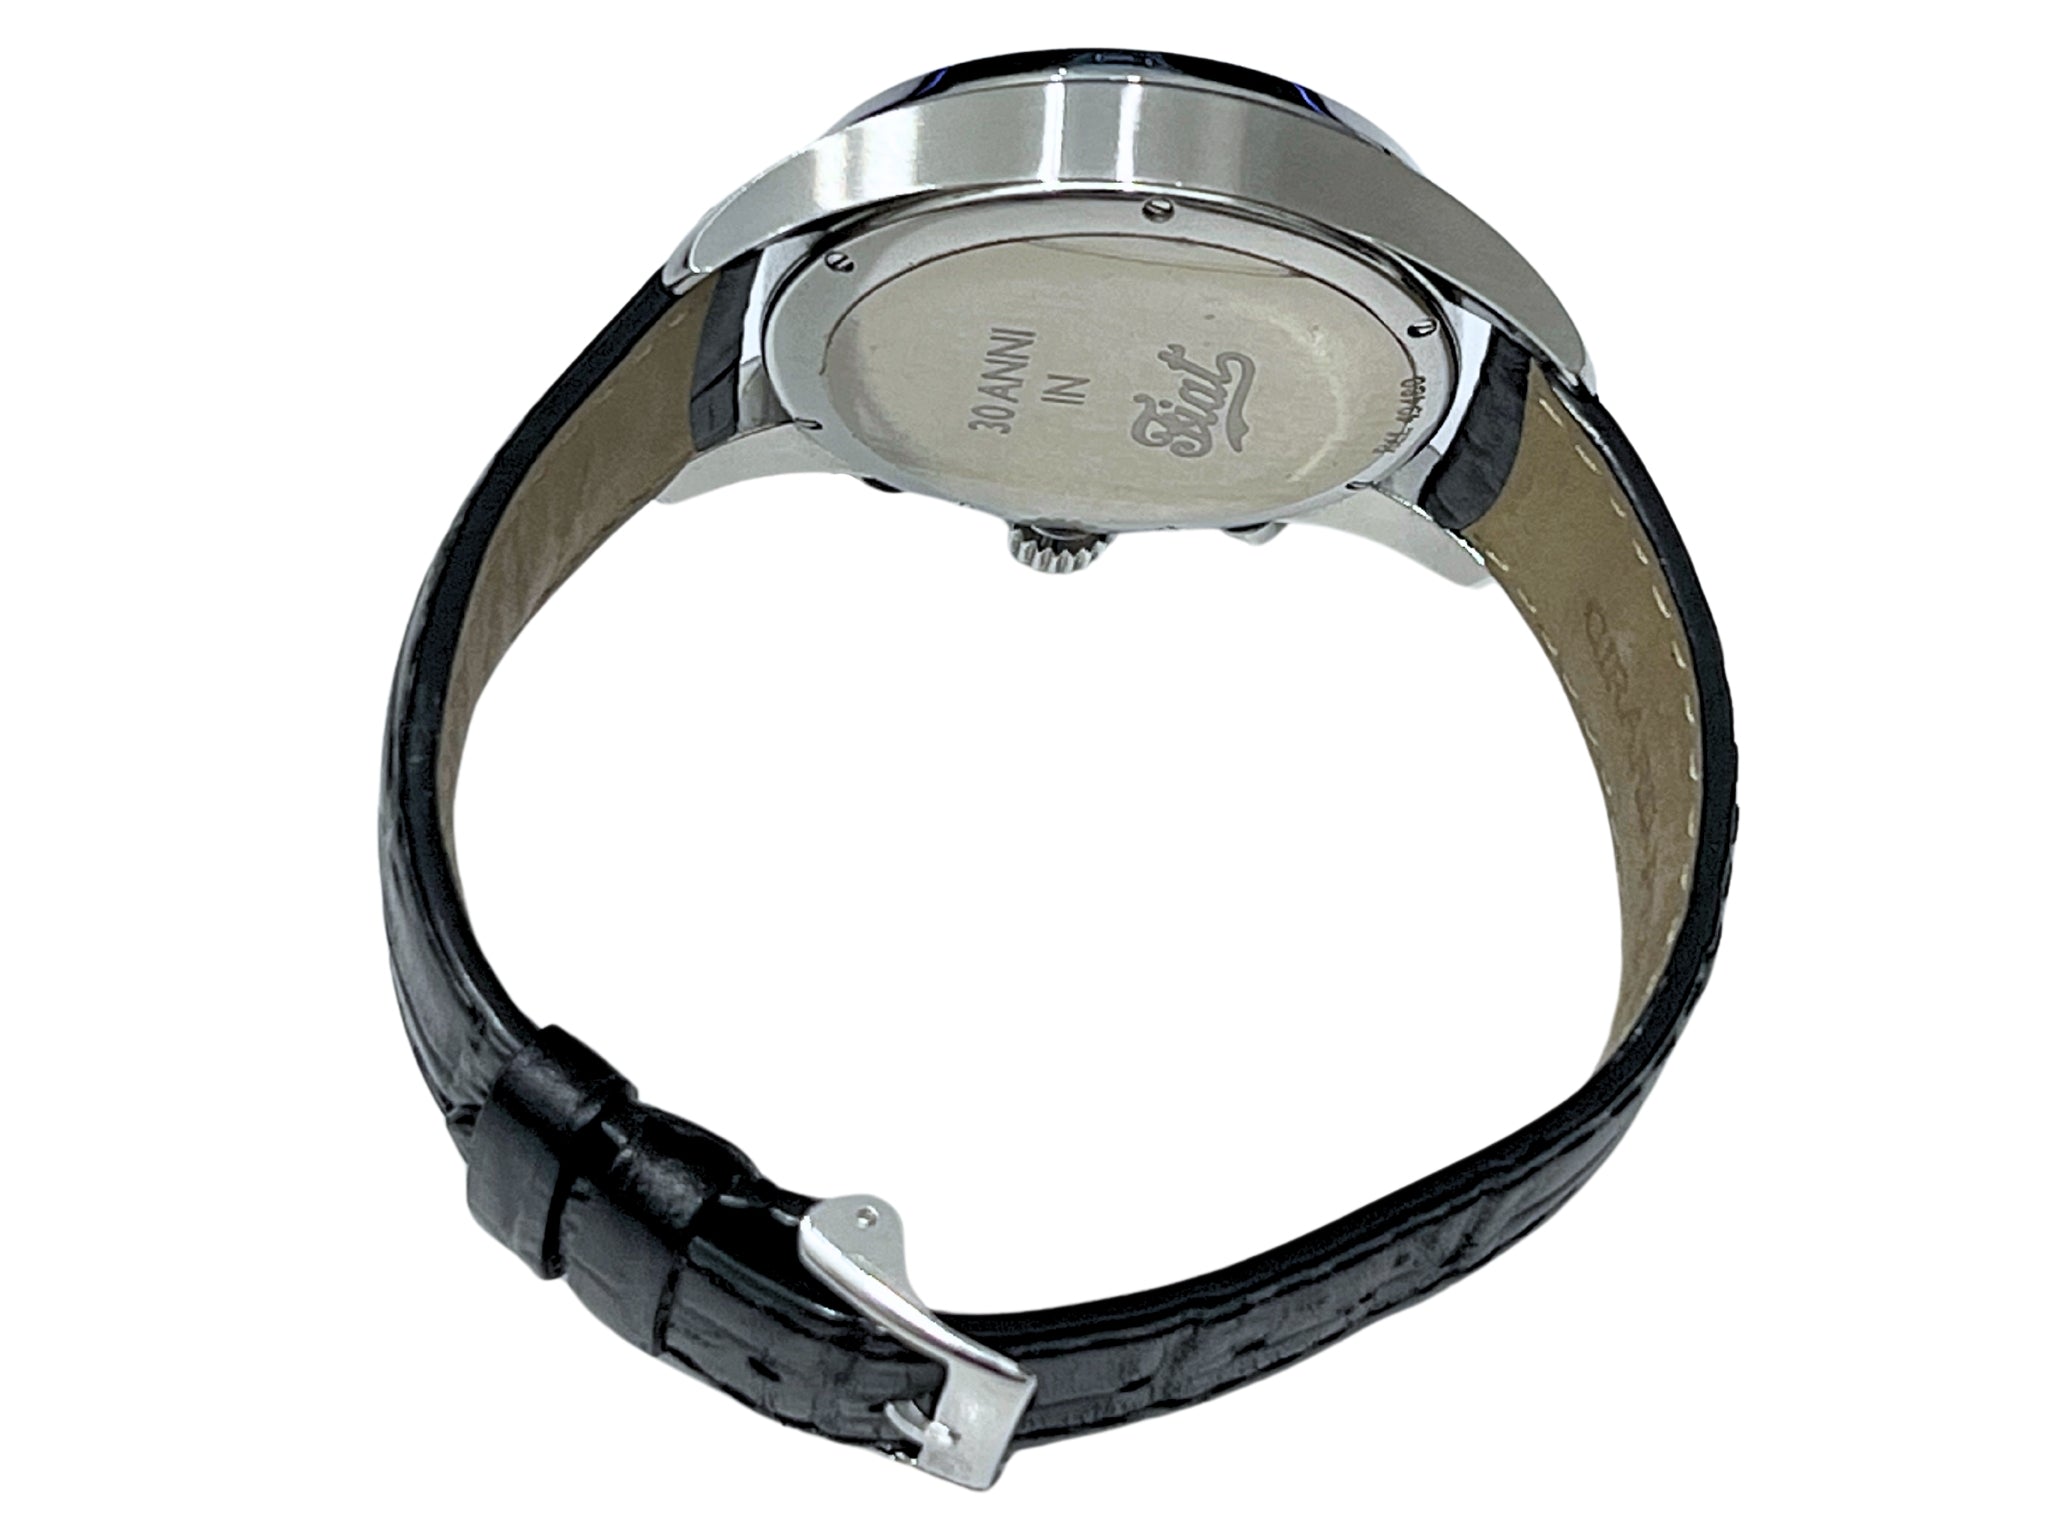 Girard-Perregaux Automatic Chronograph Watch